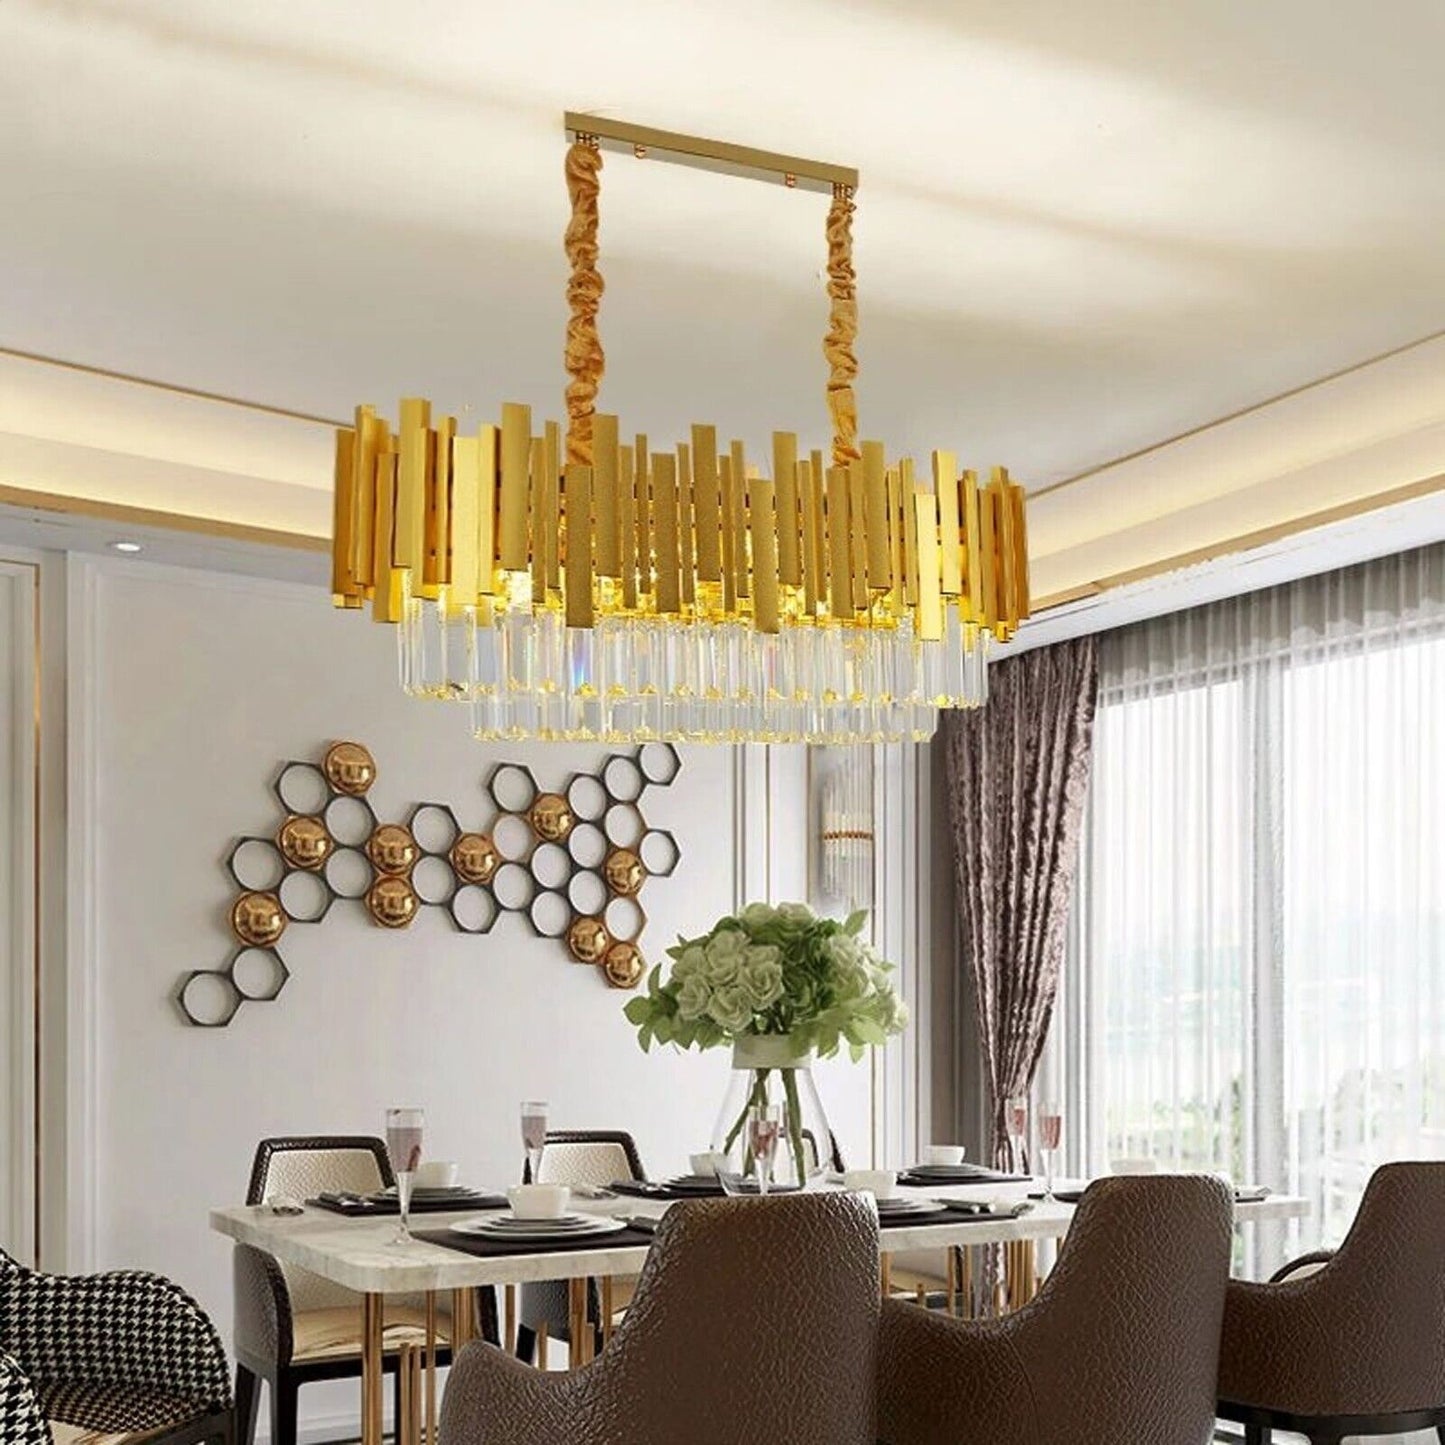 Hdc 1200mm Modern Large Crystal Ceiling Light Gold Pendant Chandelier Lamp for Living Room